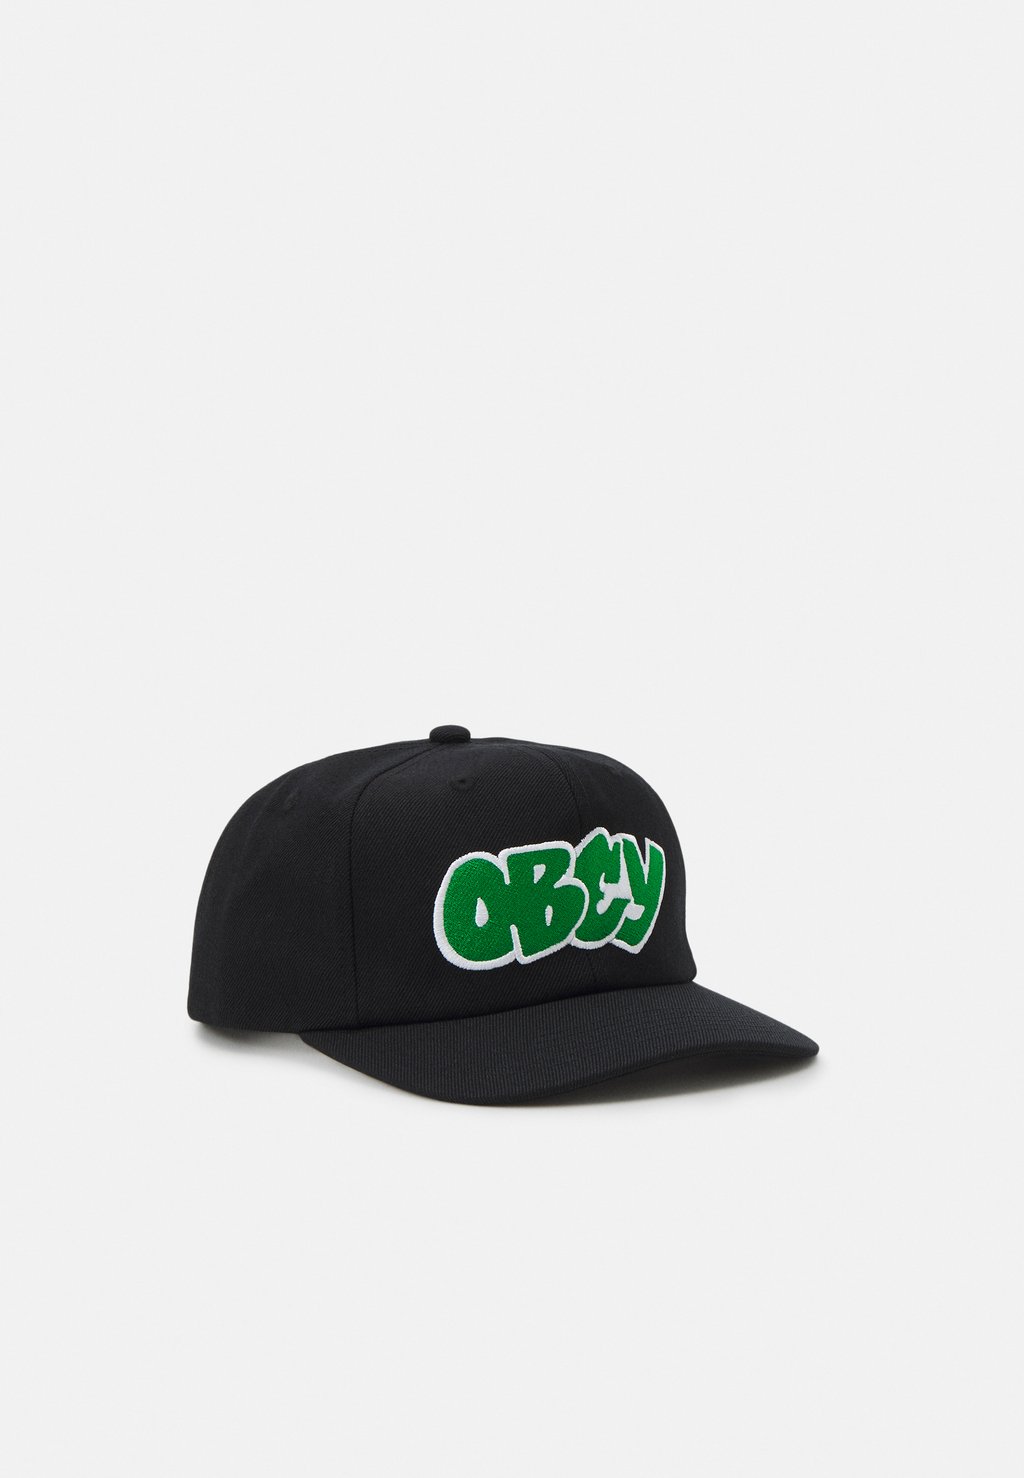 Кепка Obey Clothing ROLL CALL 6 PANEL CLASSIC SNAP, черный кепка obey clothing flower 6 panel strapback черный